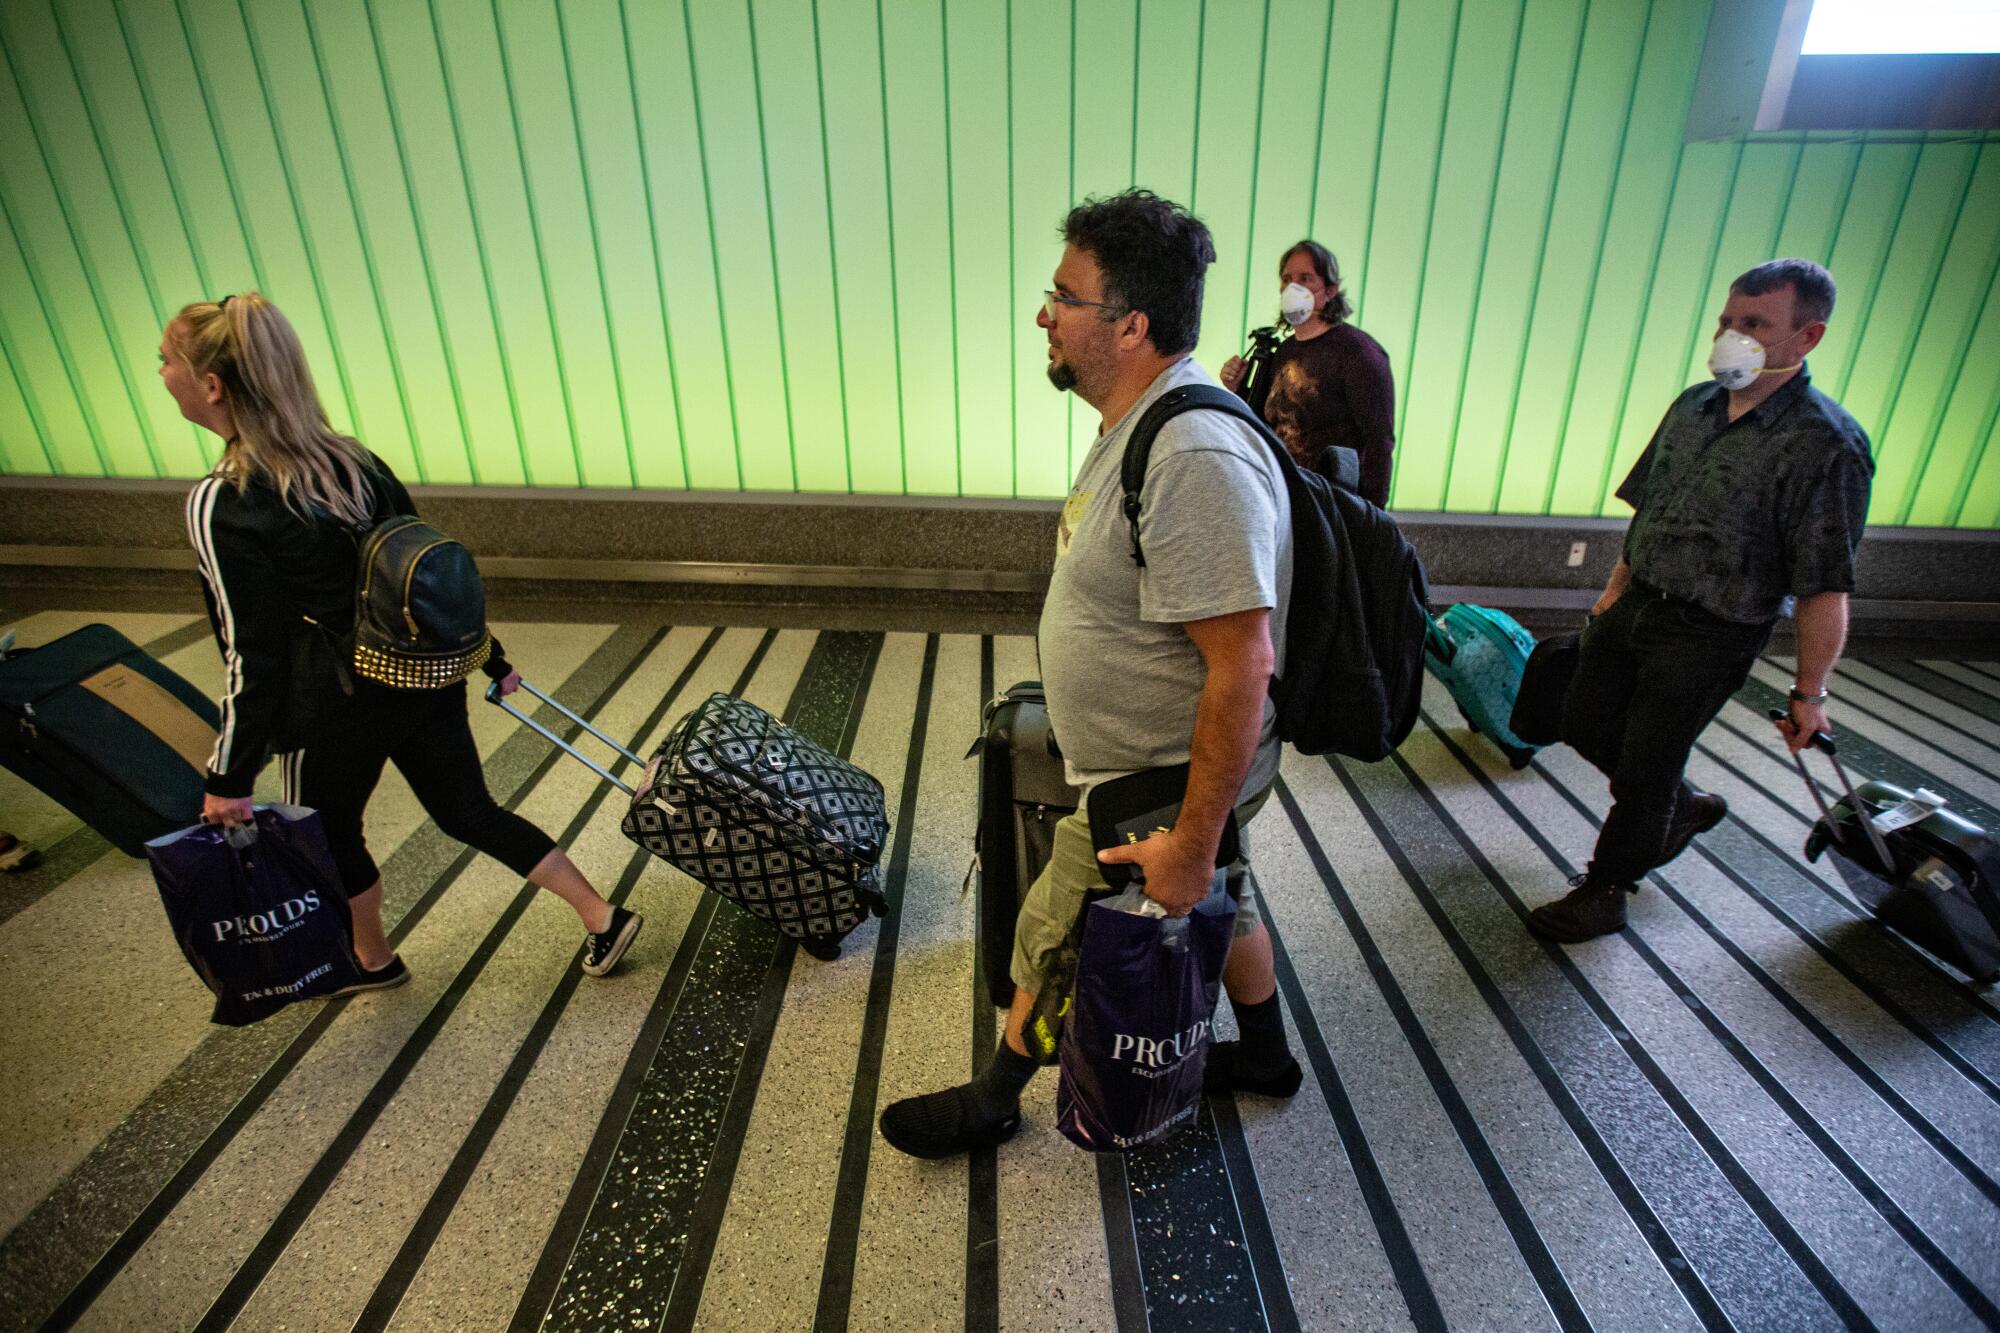 Travelers pass through Tom Bradley International Terminal at LAX